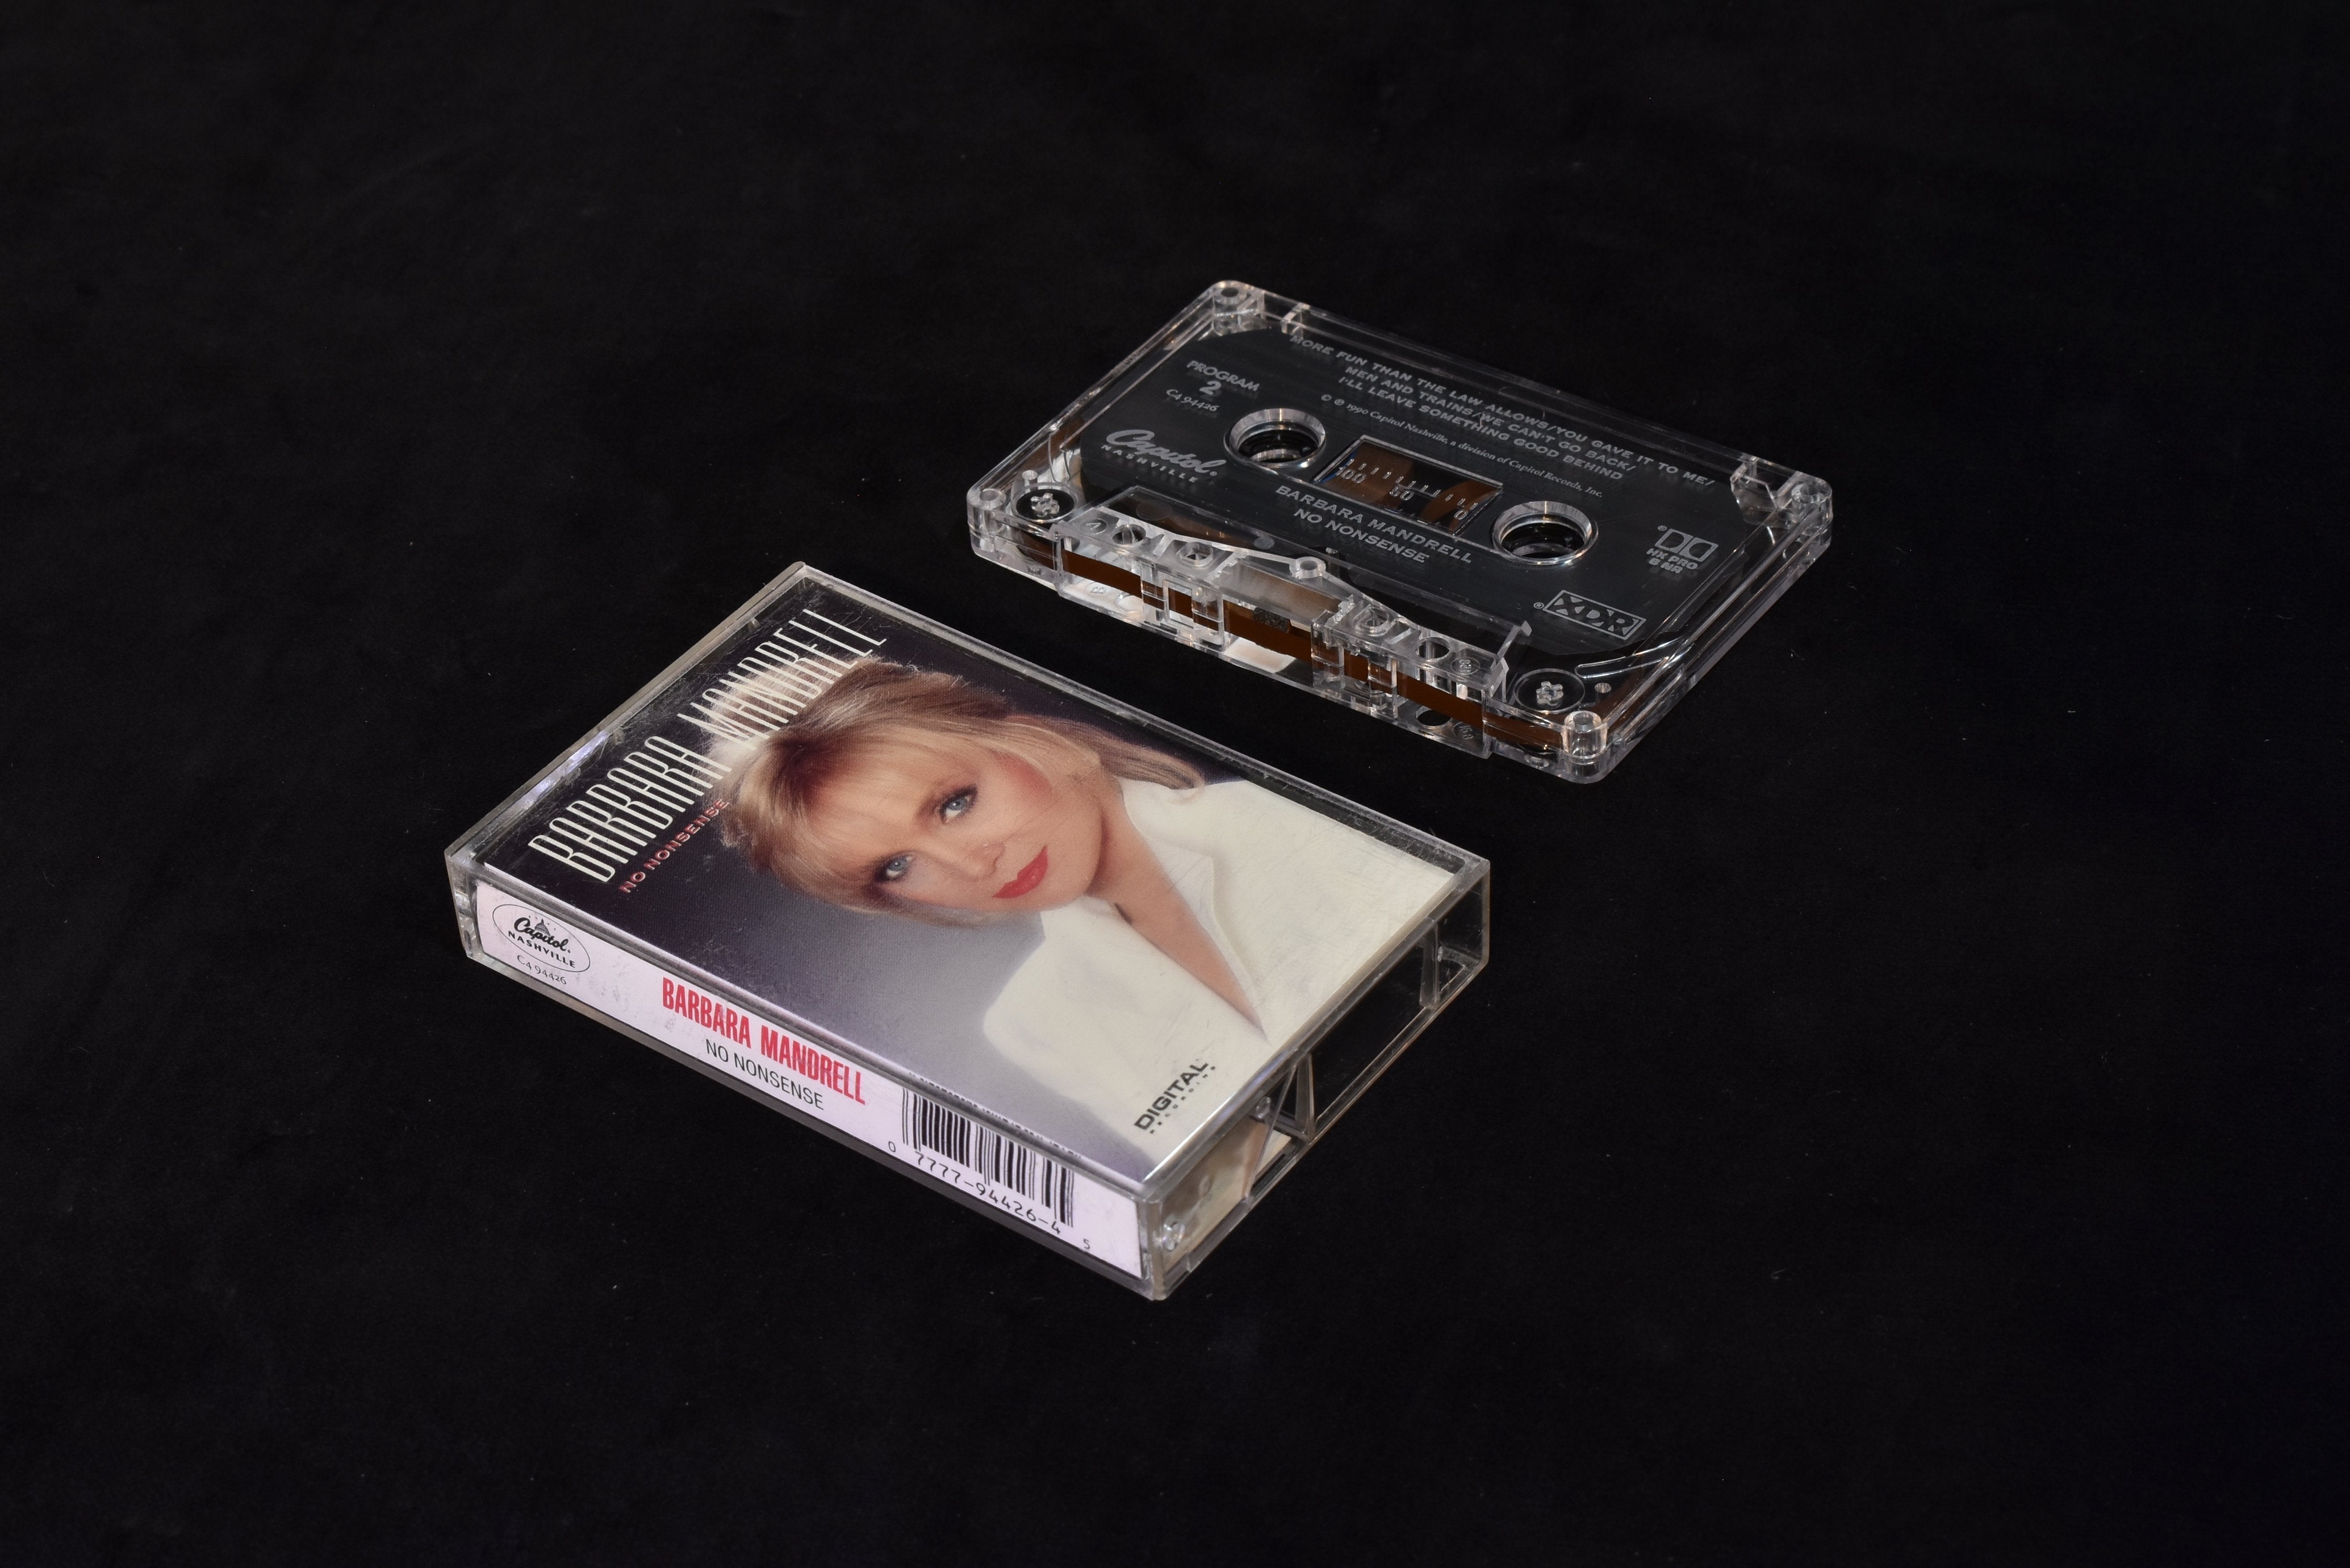 Barbara Mandrell no nonsense cassette tape used